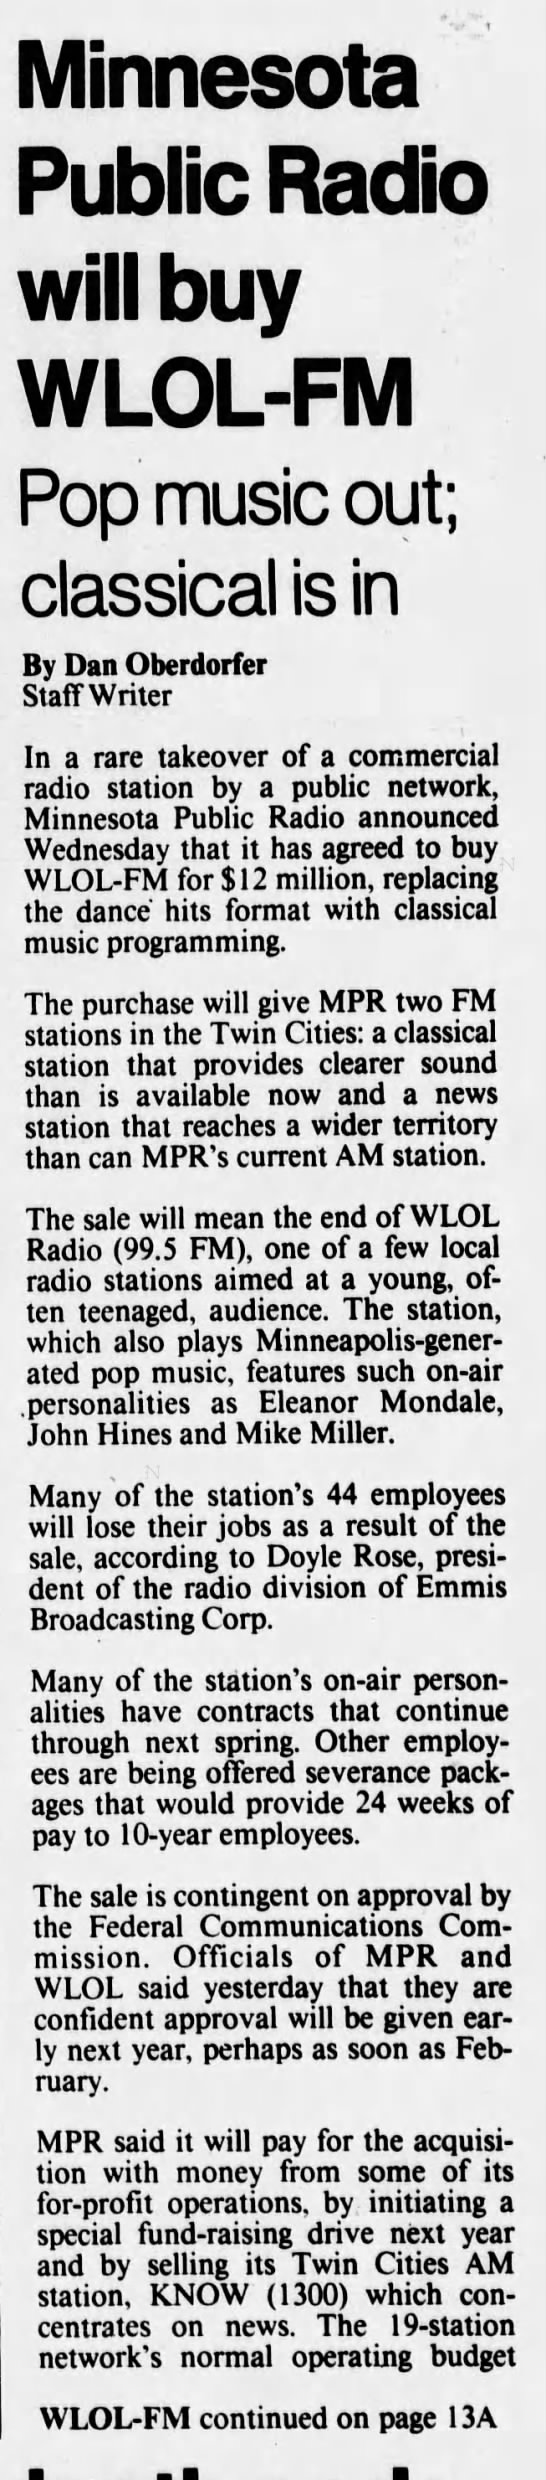 Minnesota Public Radio will buy WLOL-FM - 